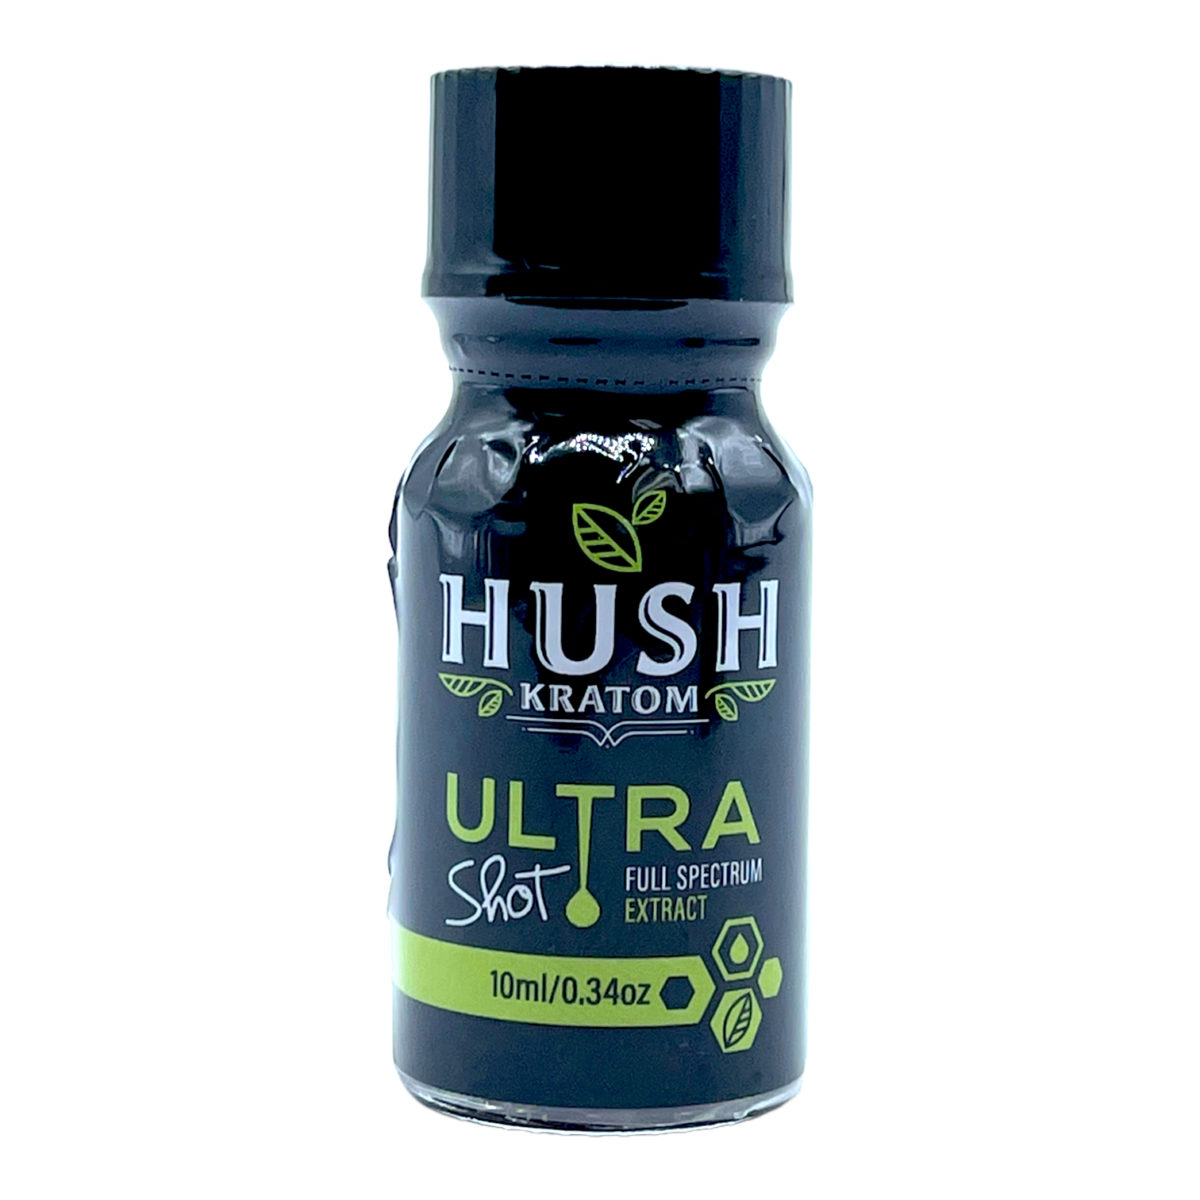 HUSH ULTRA Full Spectrum Extract Kratom Liquid Shot, 10ml